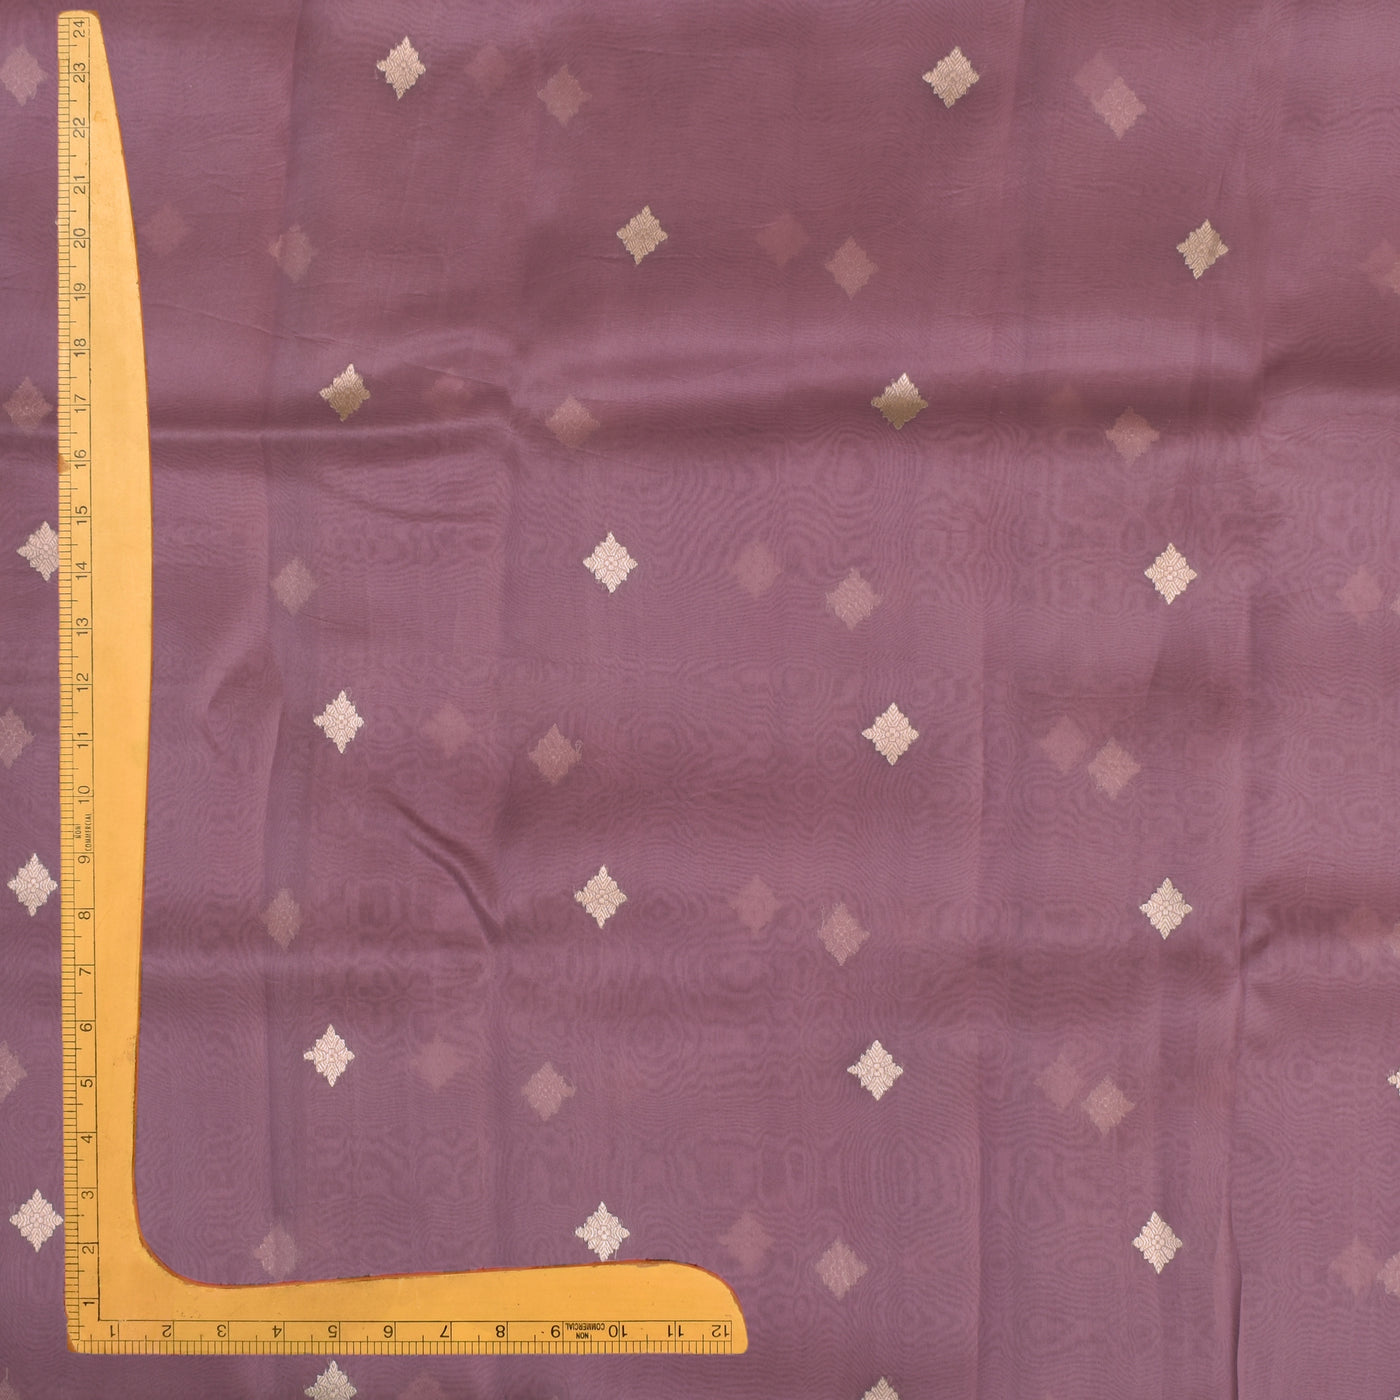 Lilac Organza Fabric with Flower Butta Design